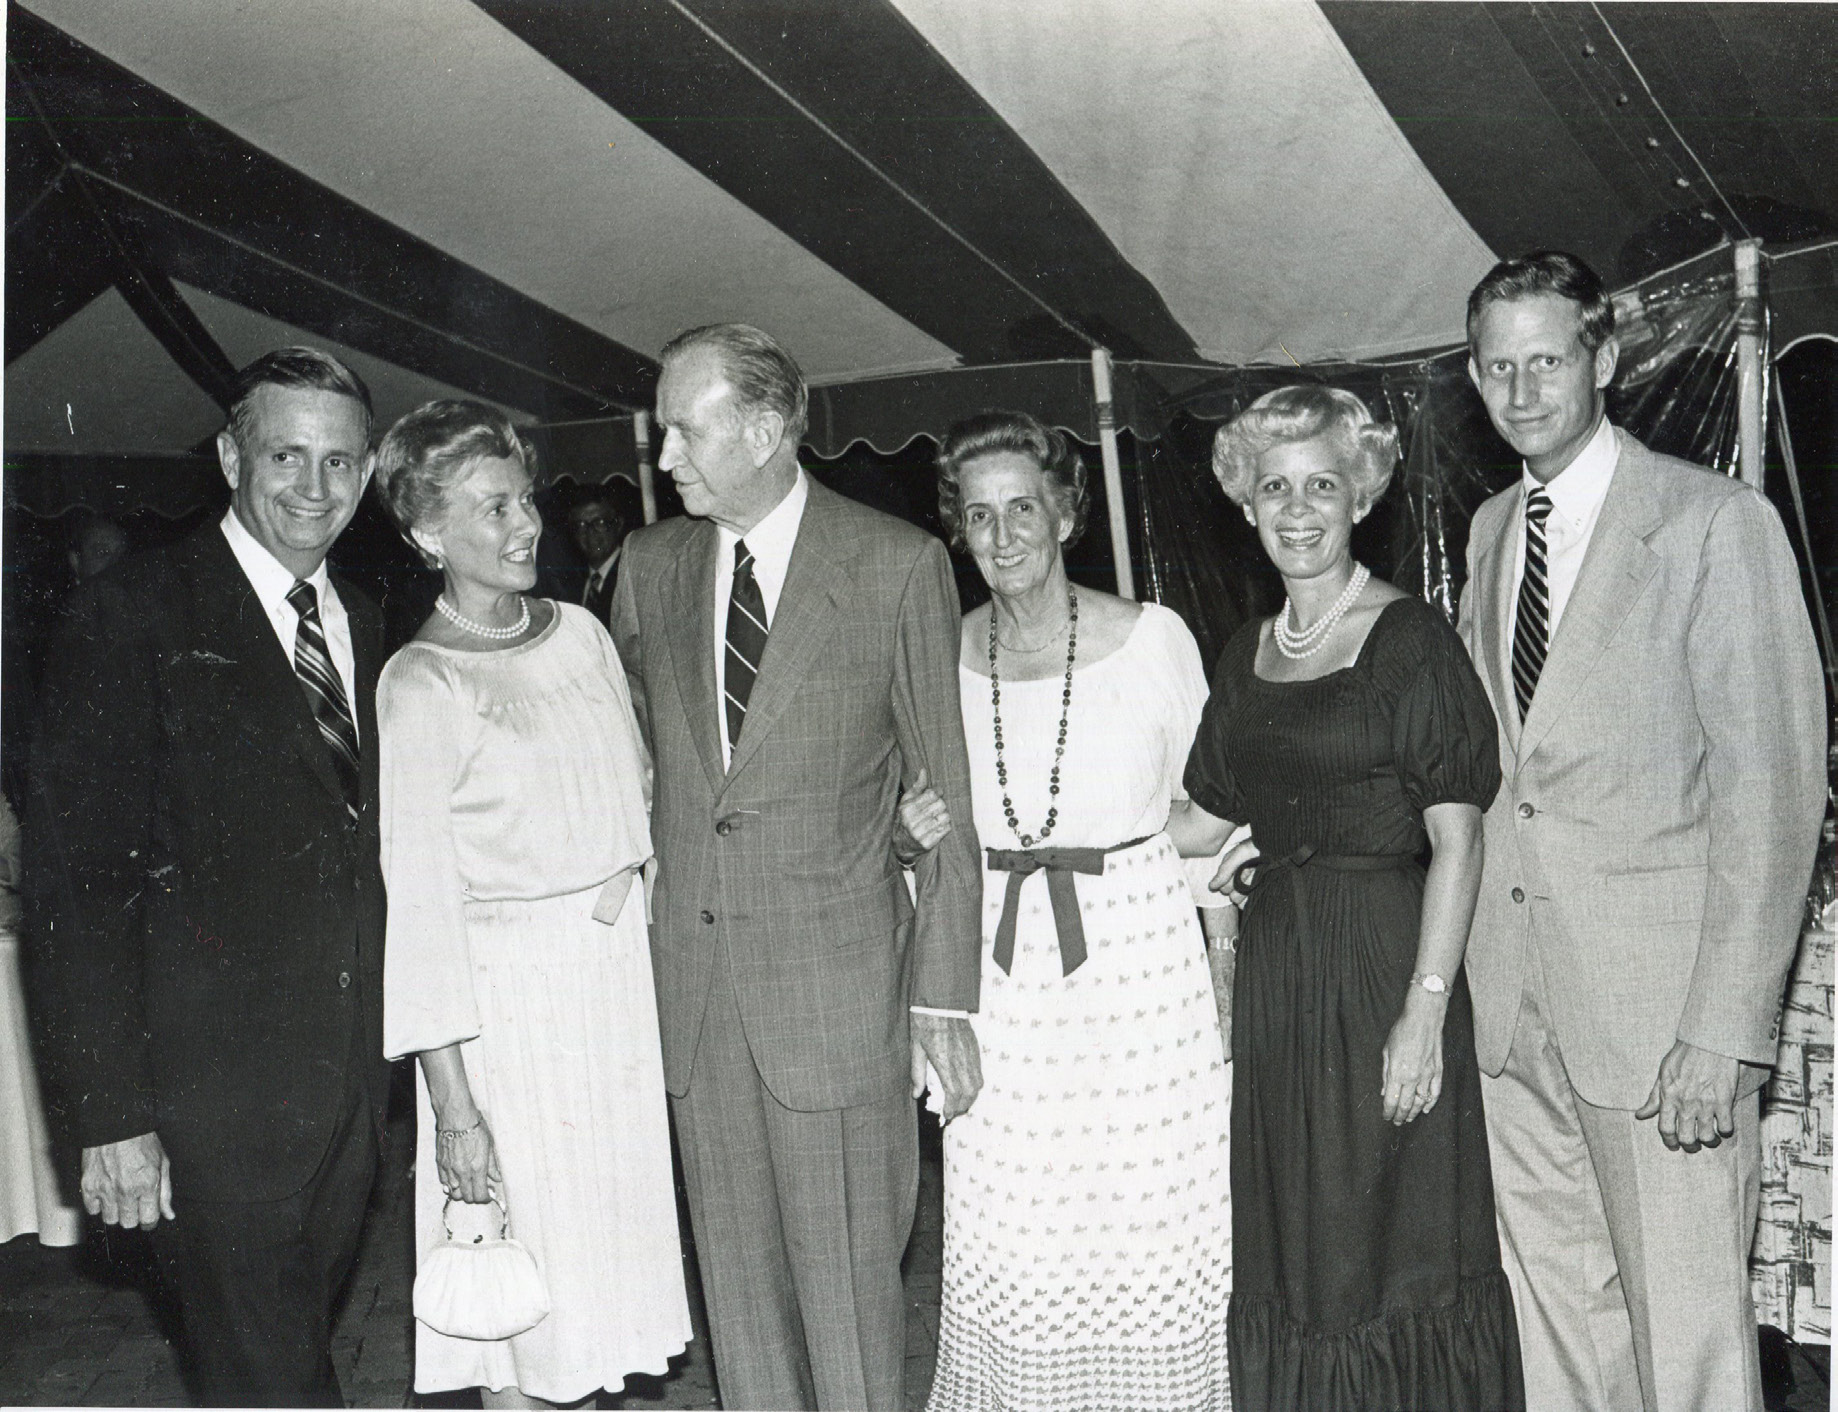 J.W. Marriott’s seventy-eighth birthday. Left to right: Bill, Donna, J.W., Allie, Nancy, and Dick Marriott.